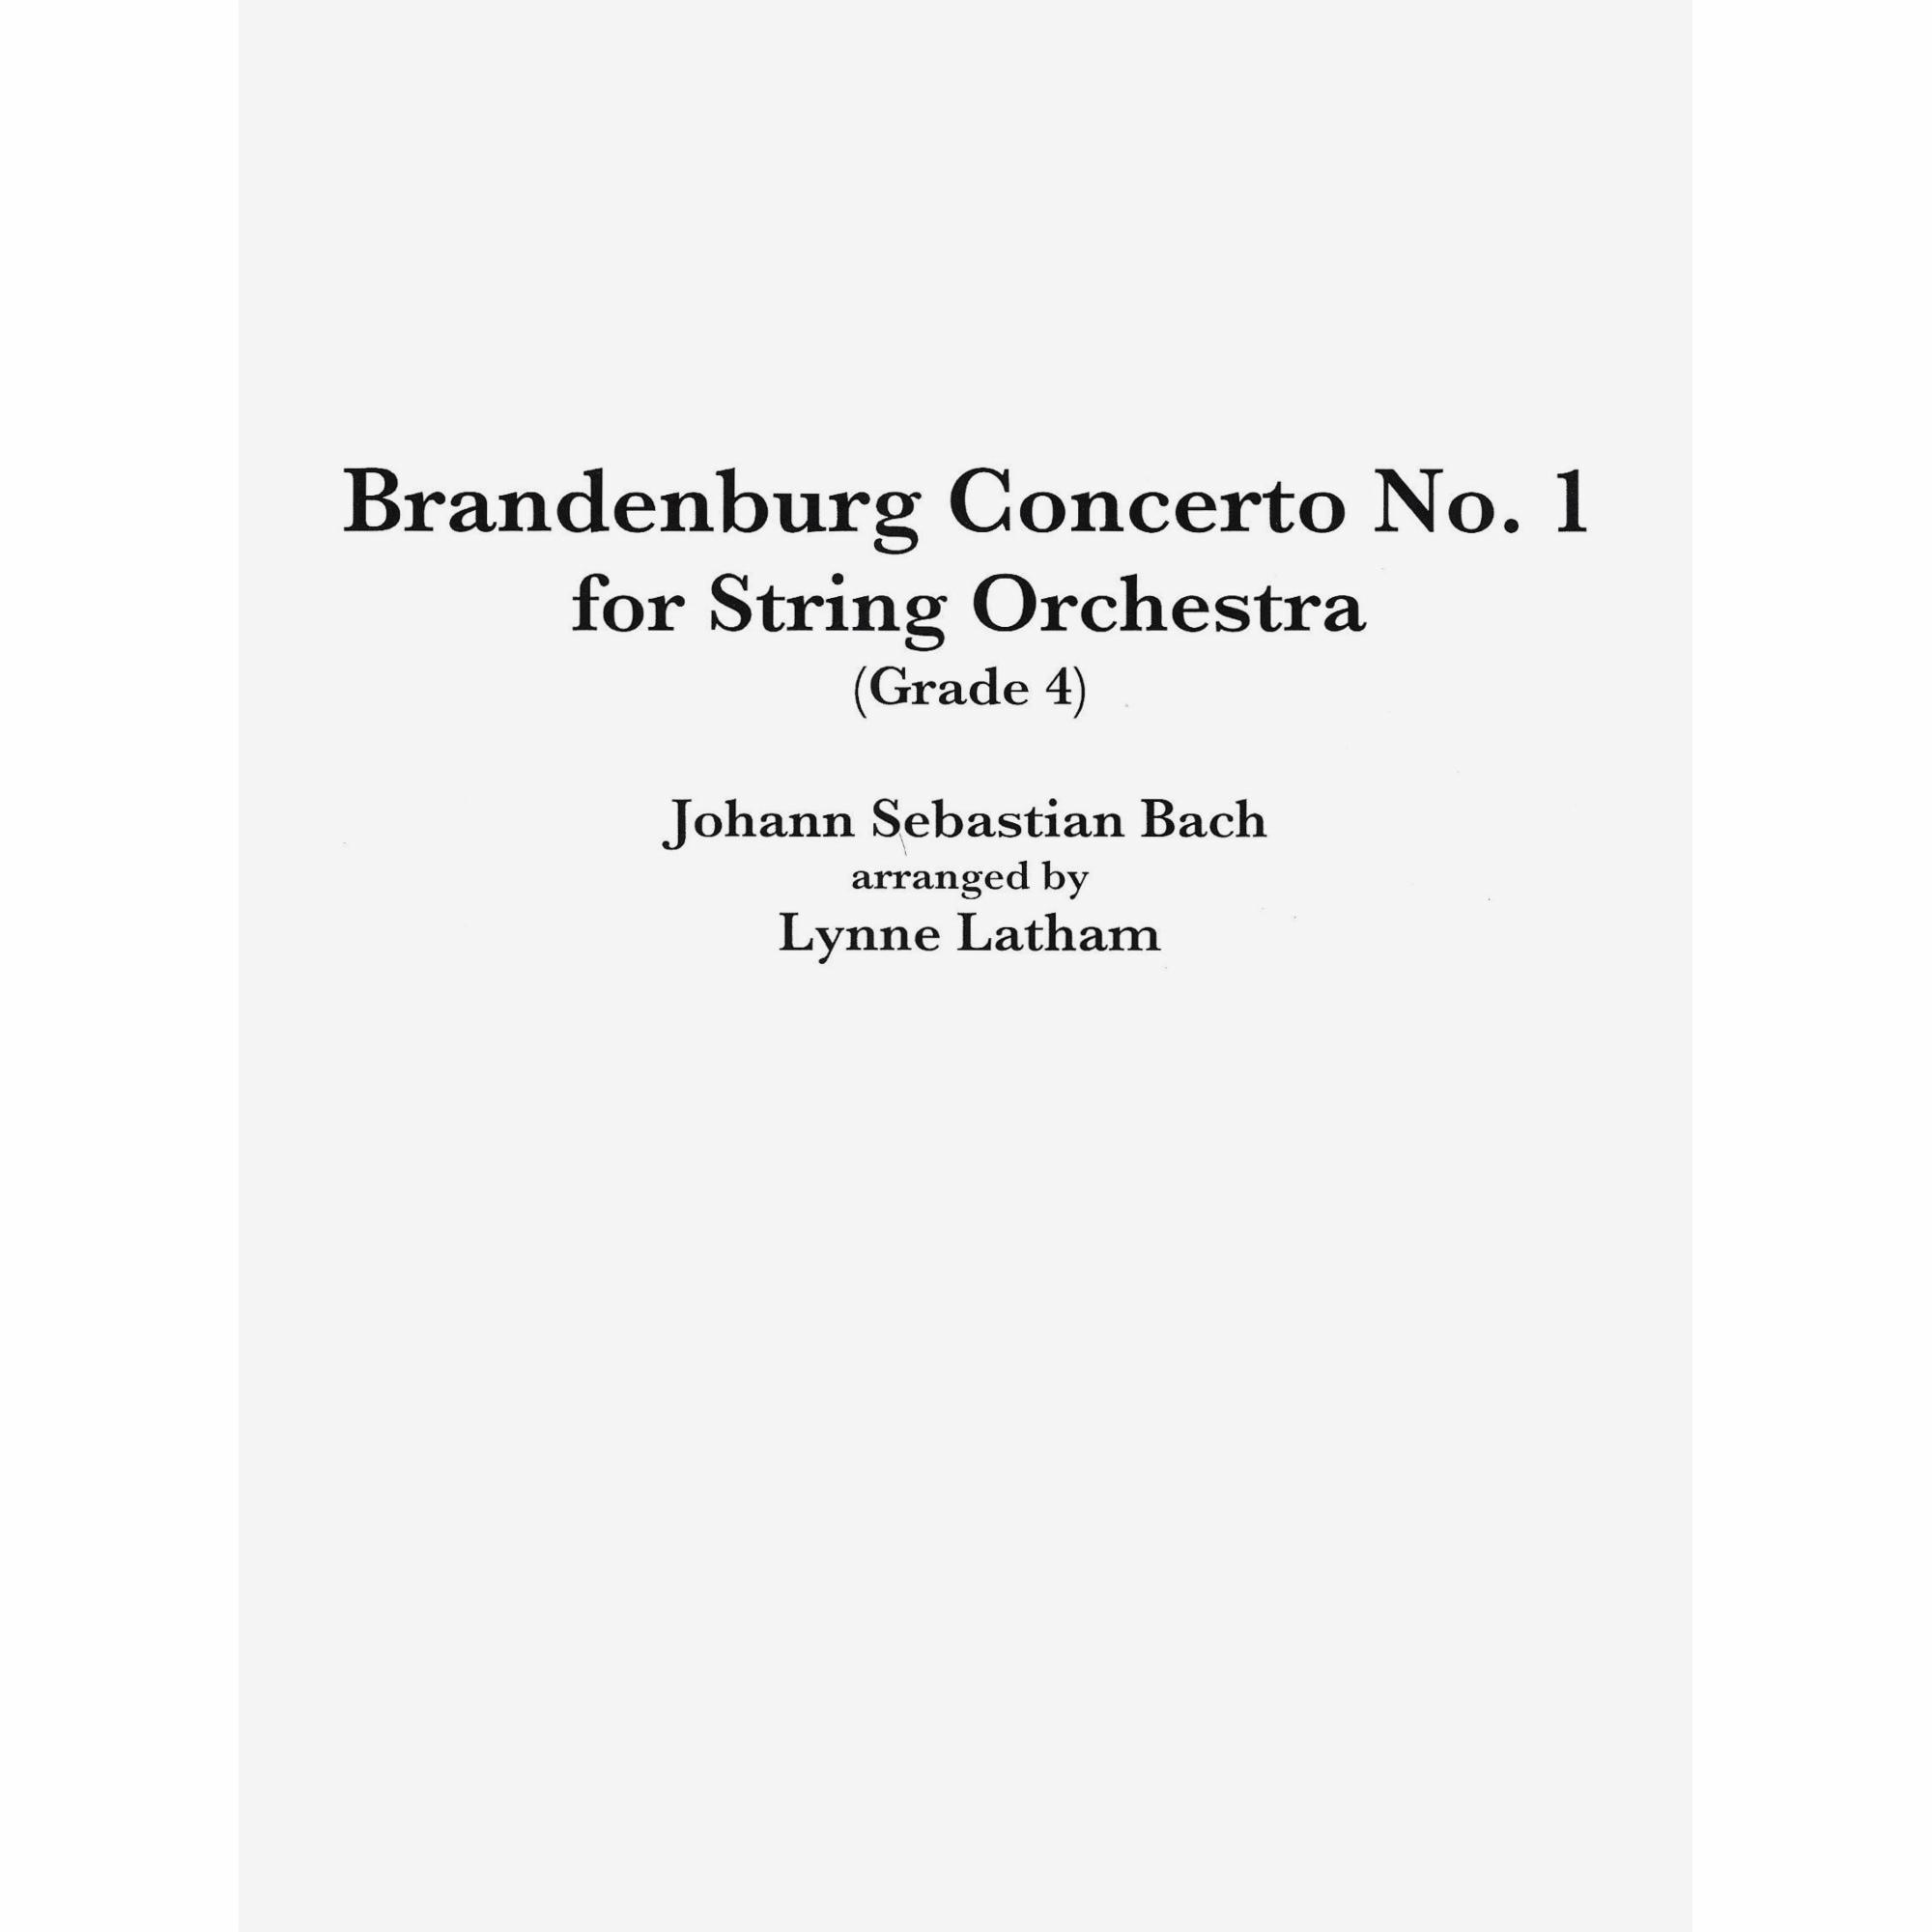 Brandenburg Concerto No. 1 for String Orchestra